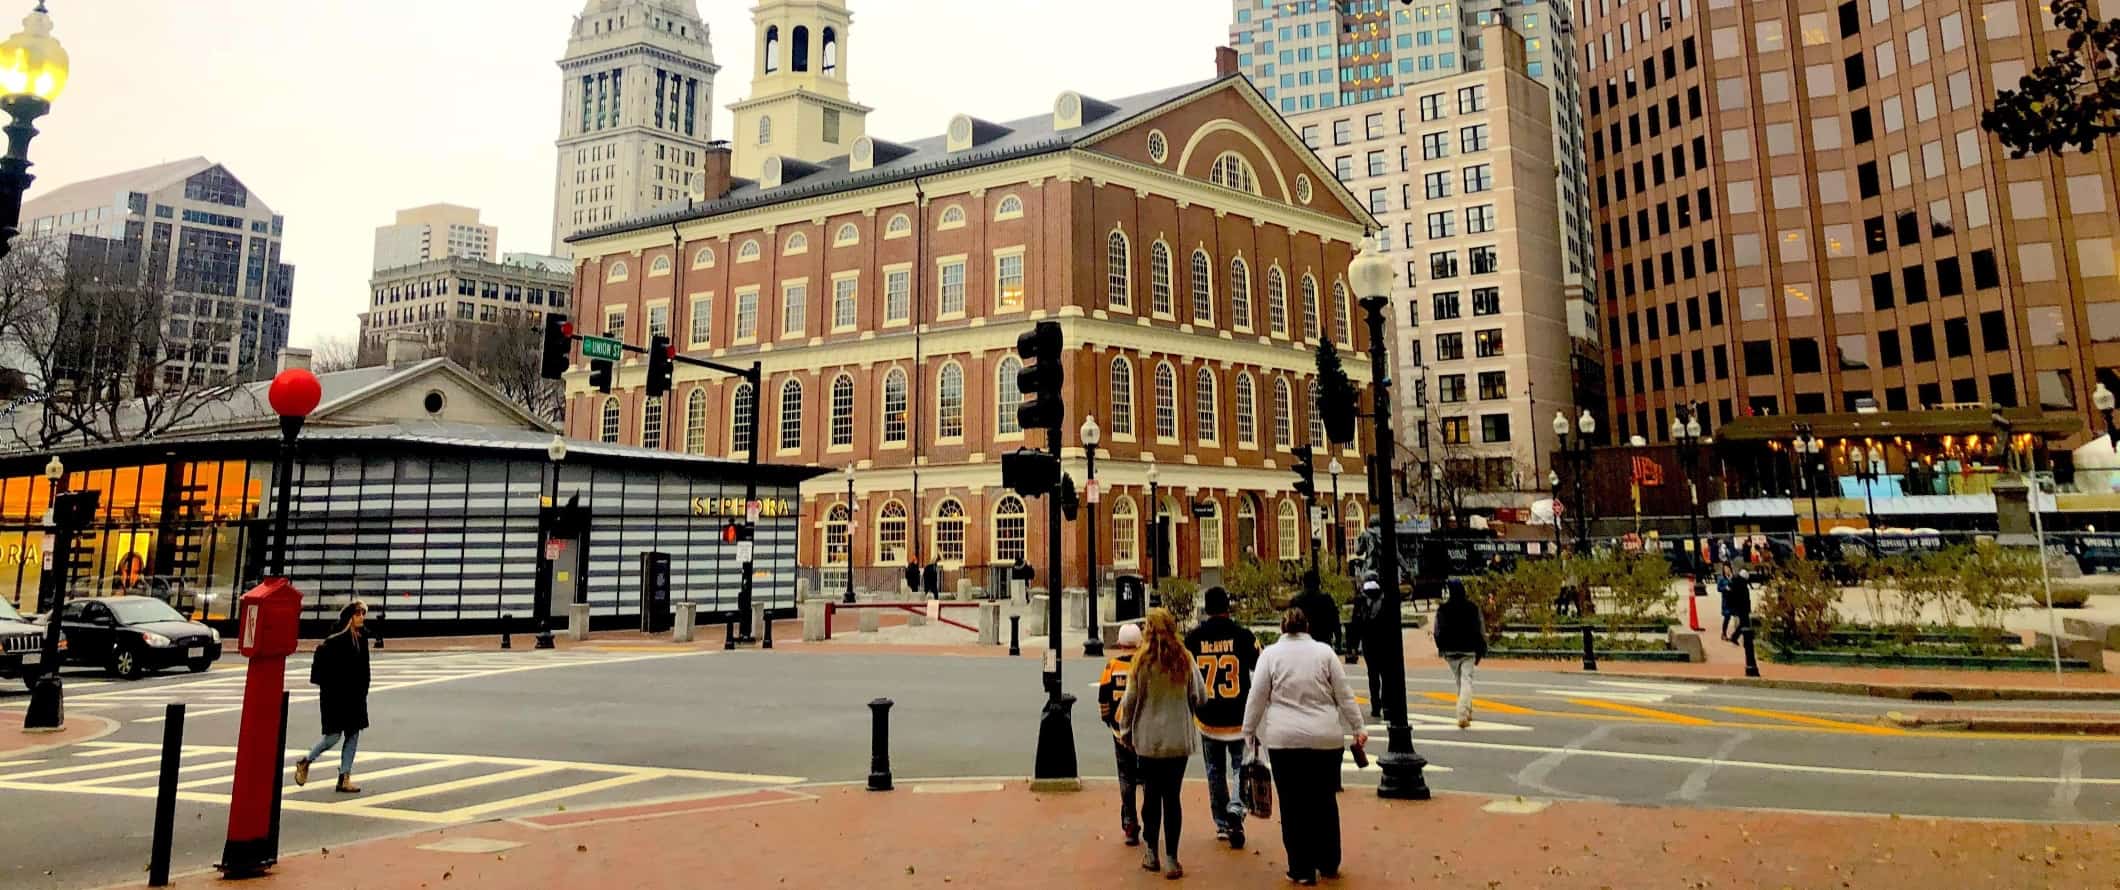 People walking around downtown Boston, Massachusetts.